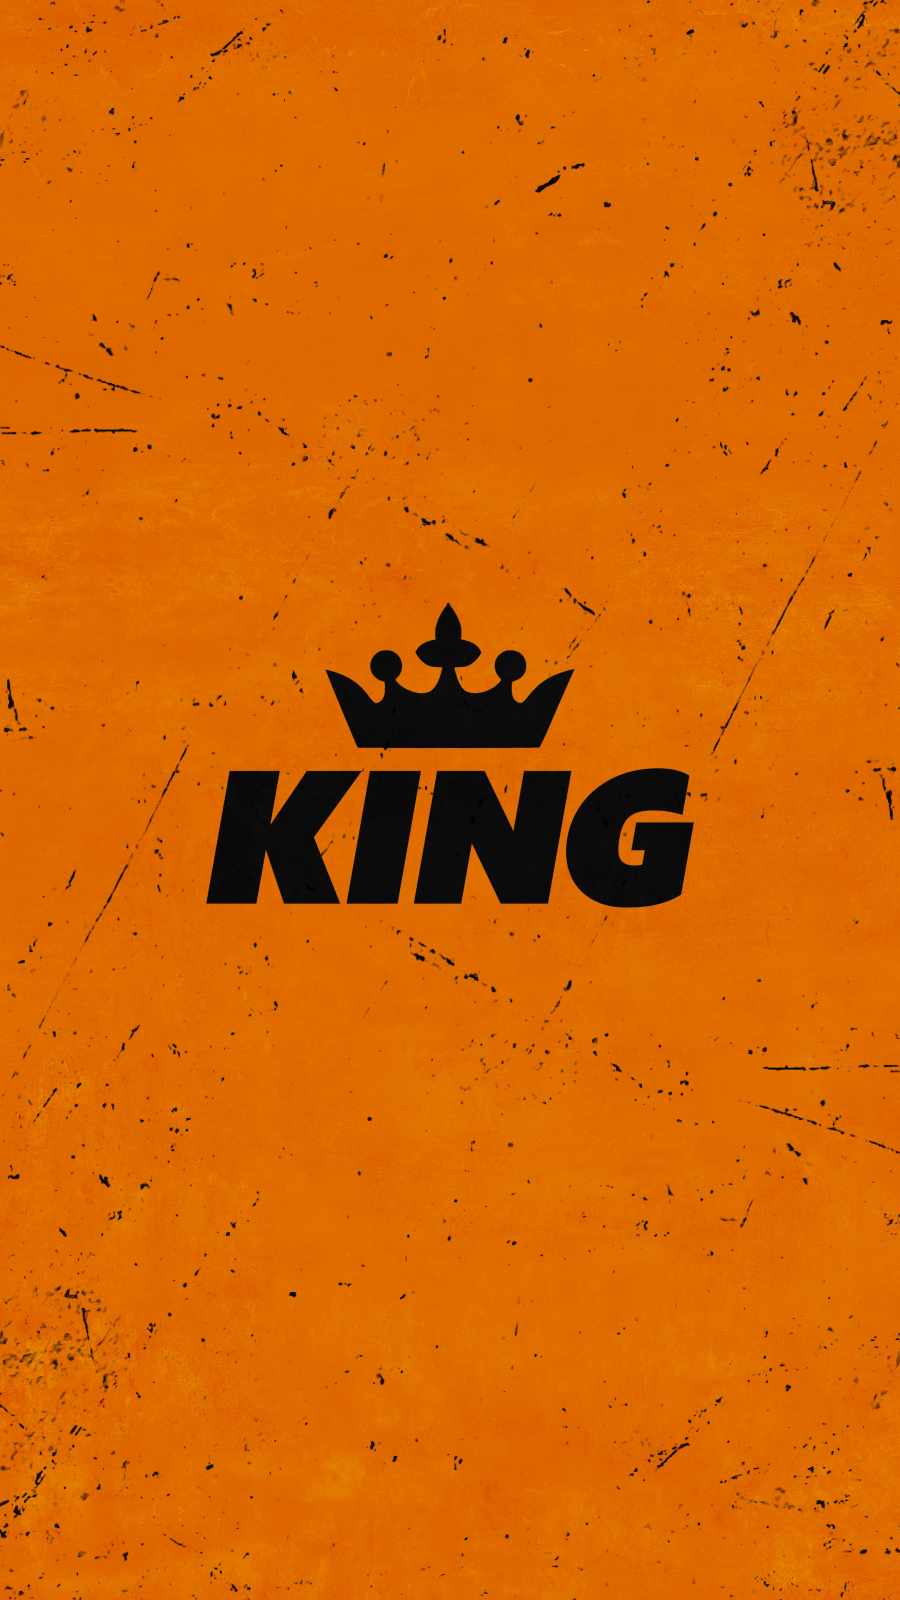 King Background Images